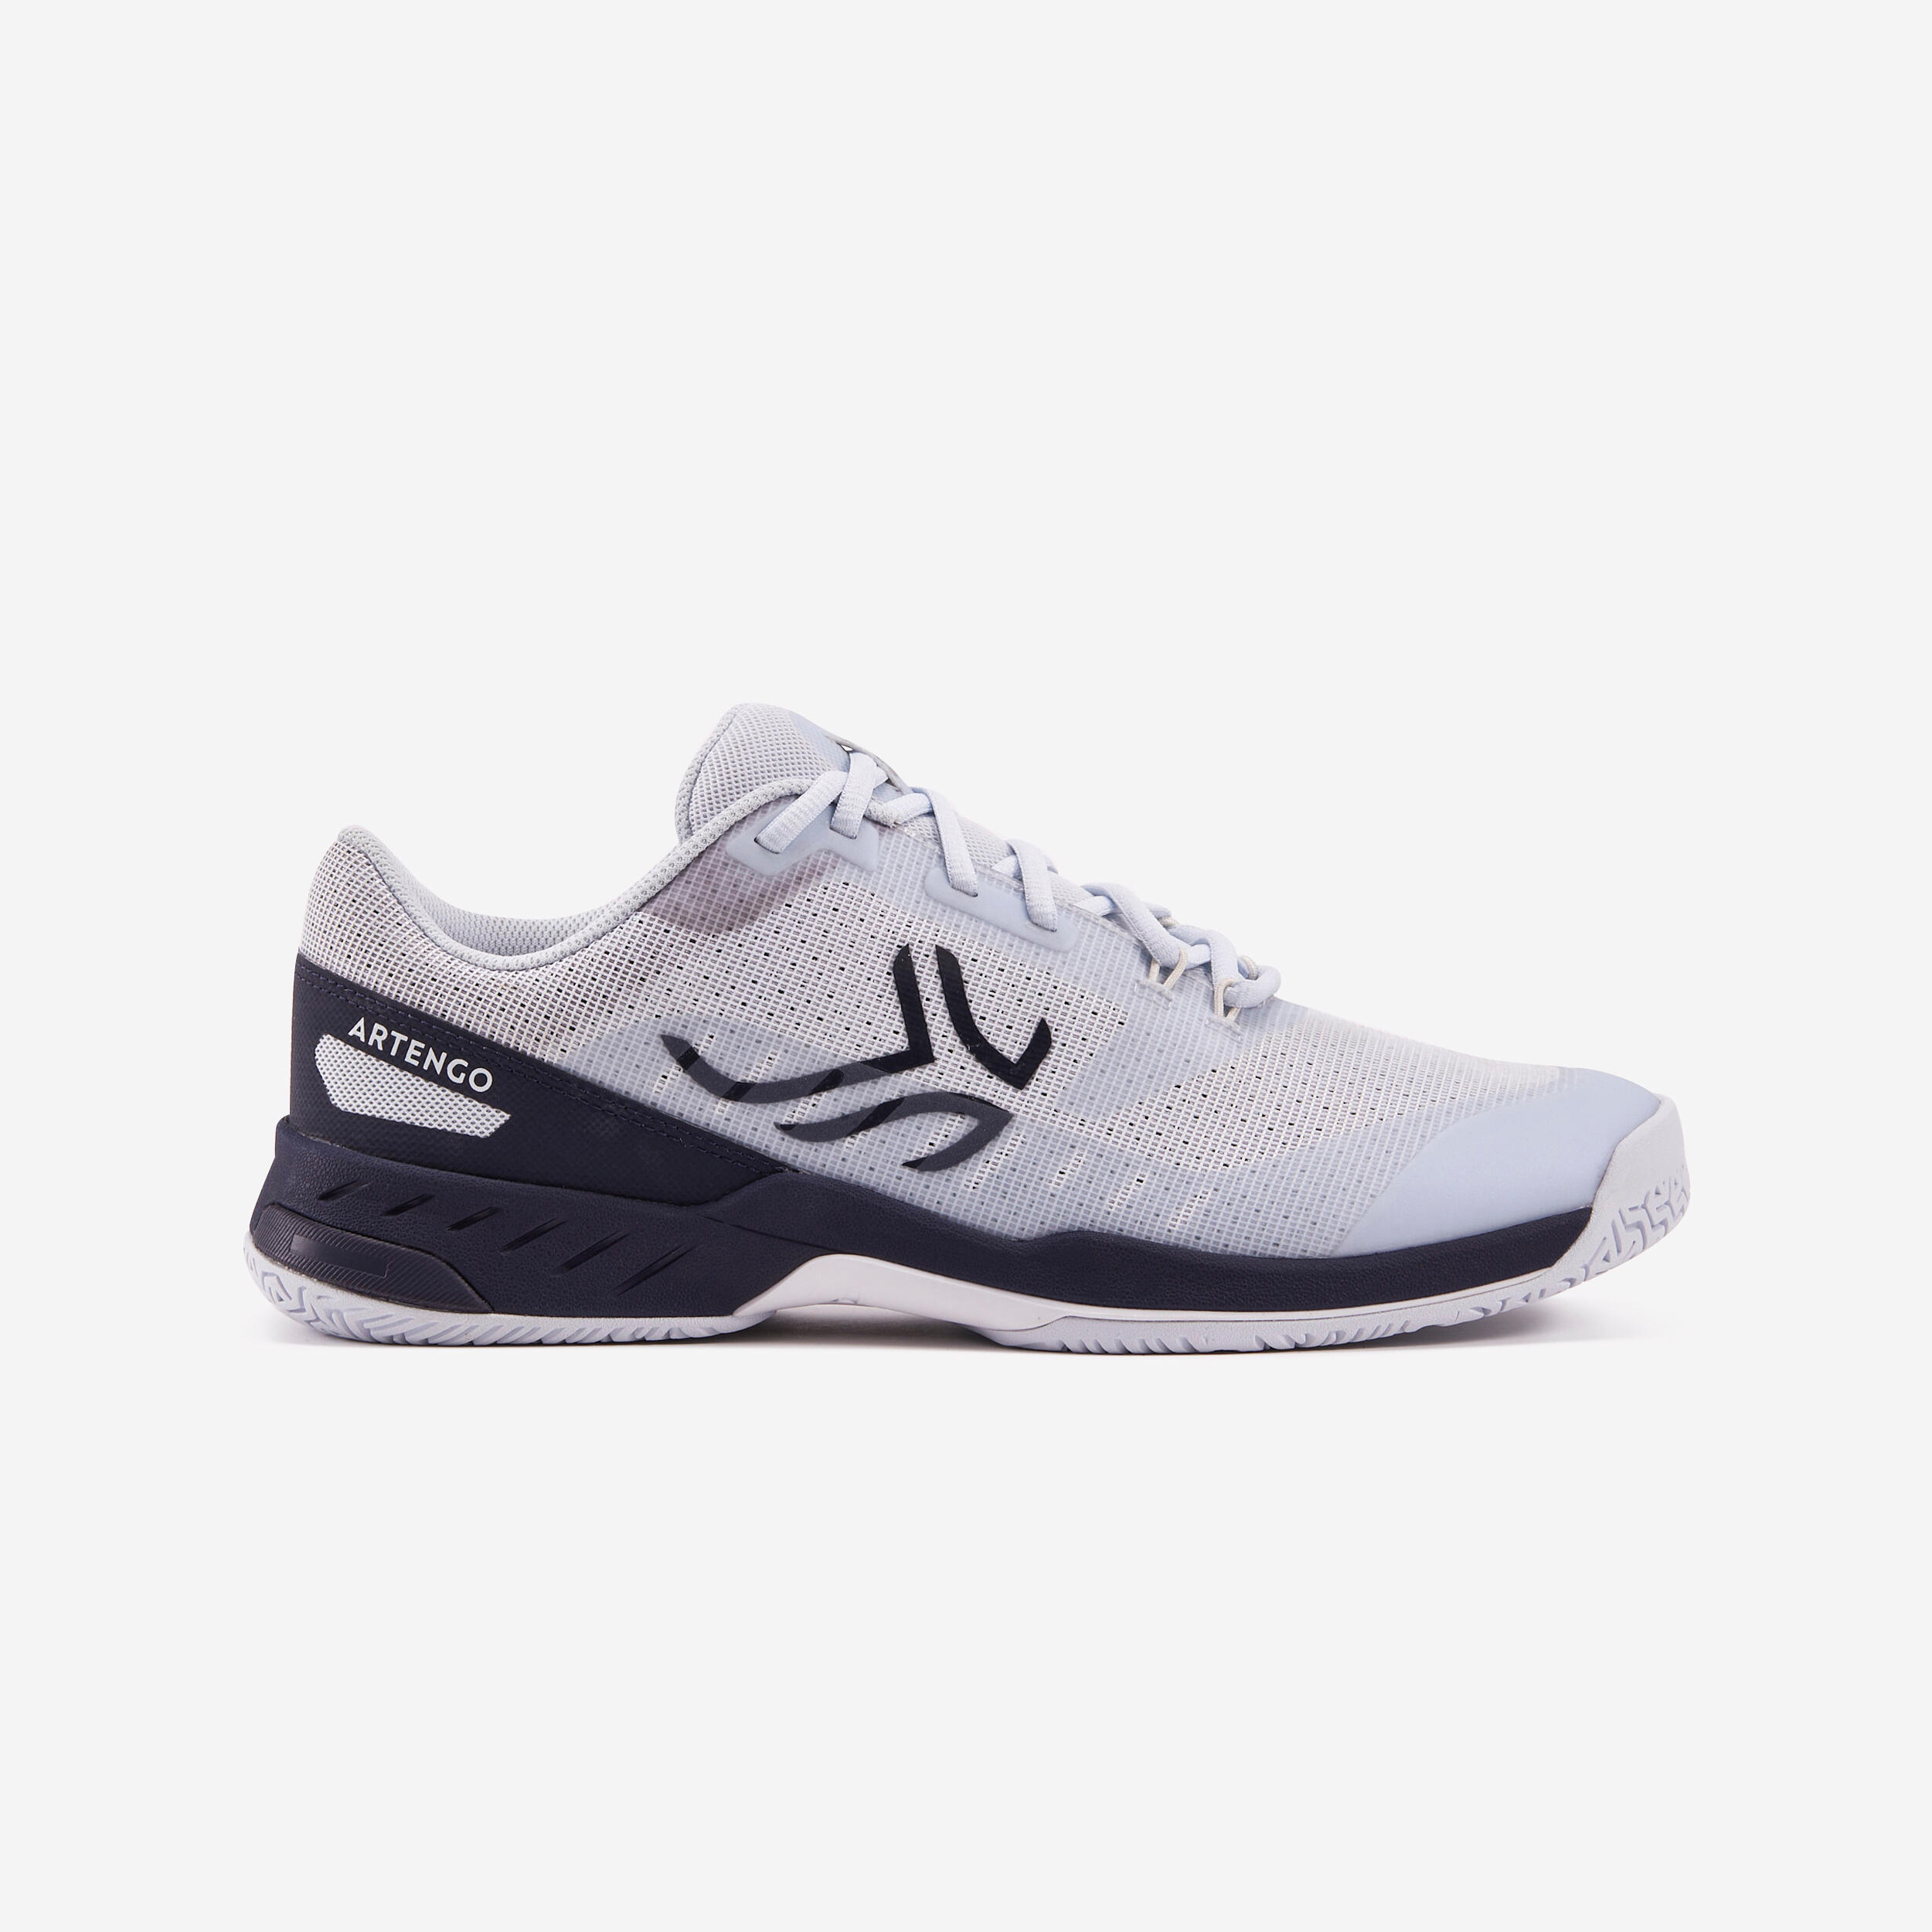 ARTENGO Men's Multicourt Tennis Shoes - Light Grey/Blue